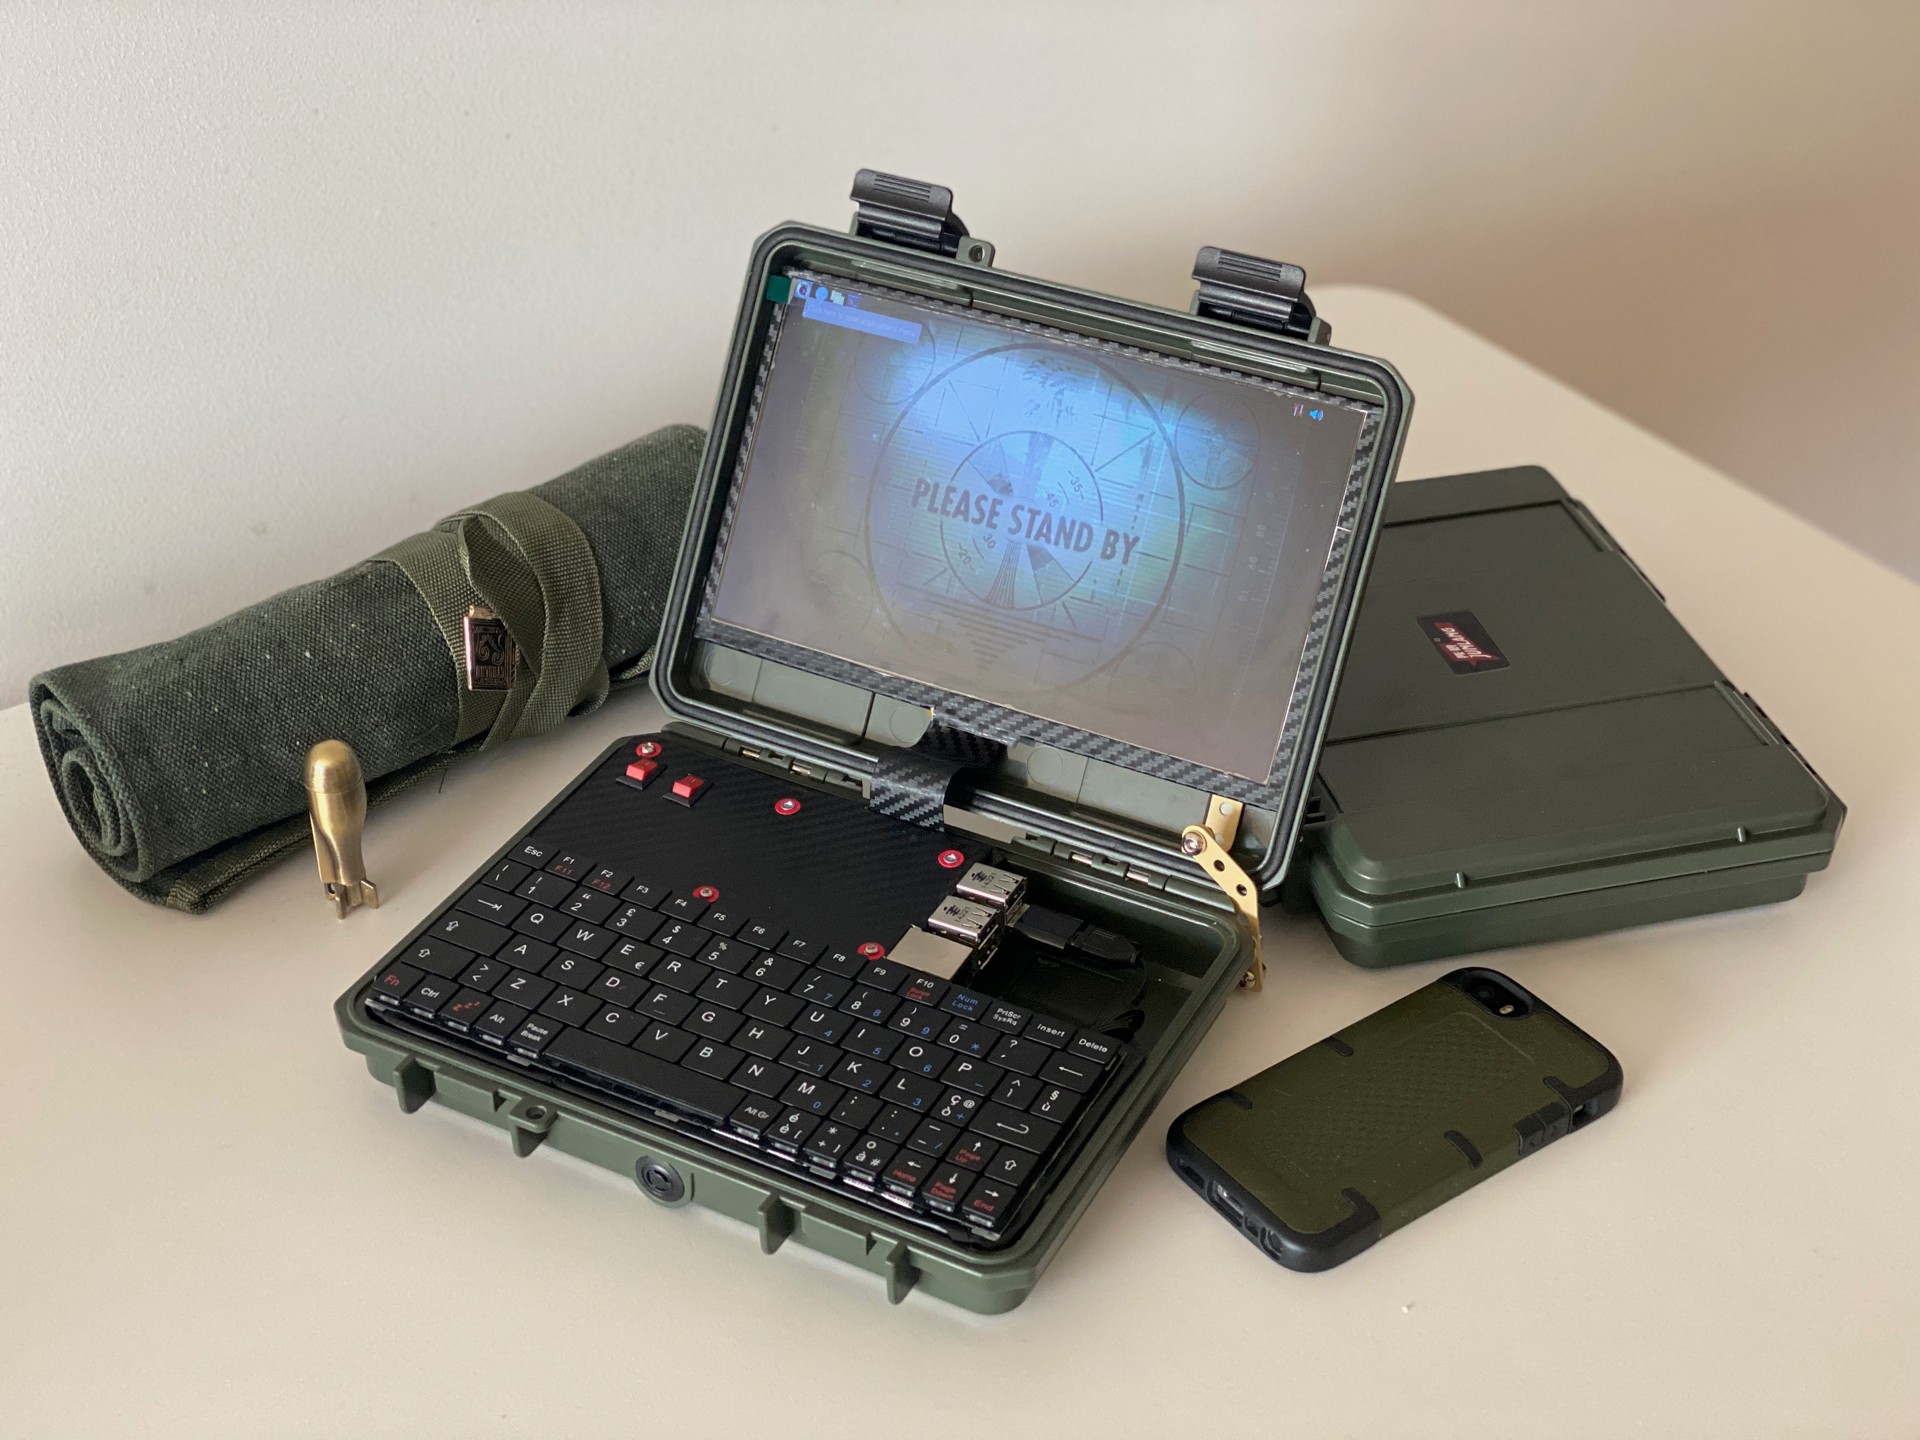 Raspberry Pi Laptop and other militarish stuff